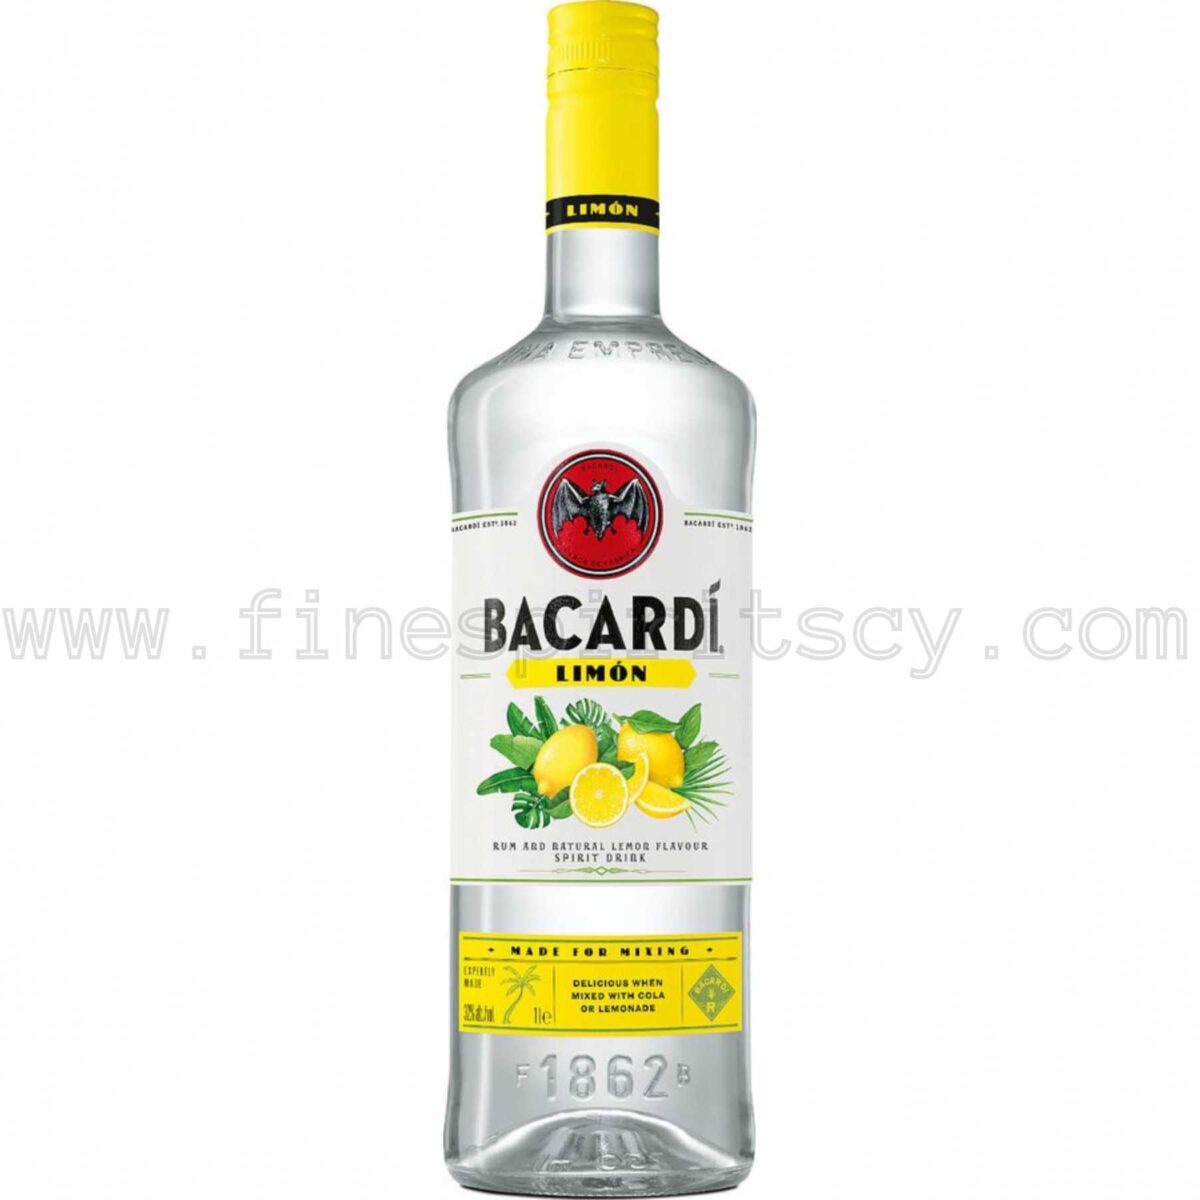 Bacardi Limon Lemon Flavored Rum Cyprus Price Order Online Fine Spirits